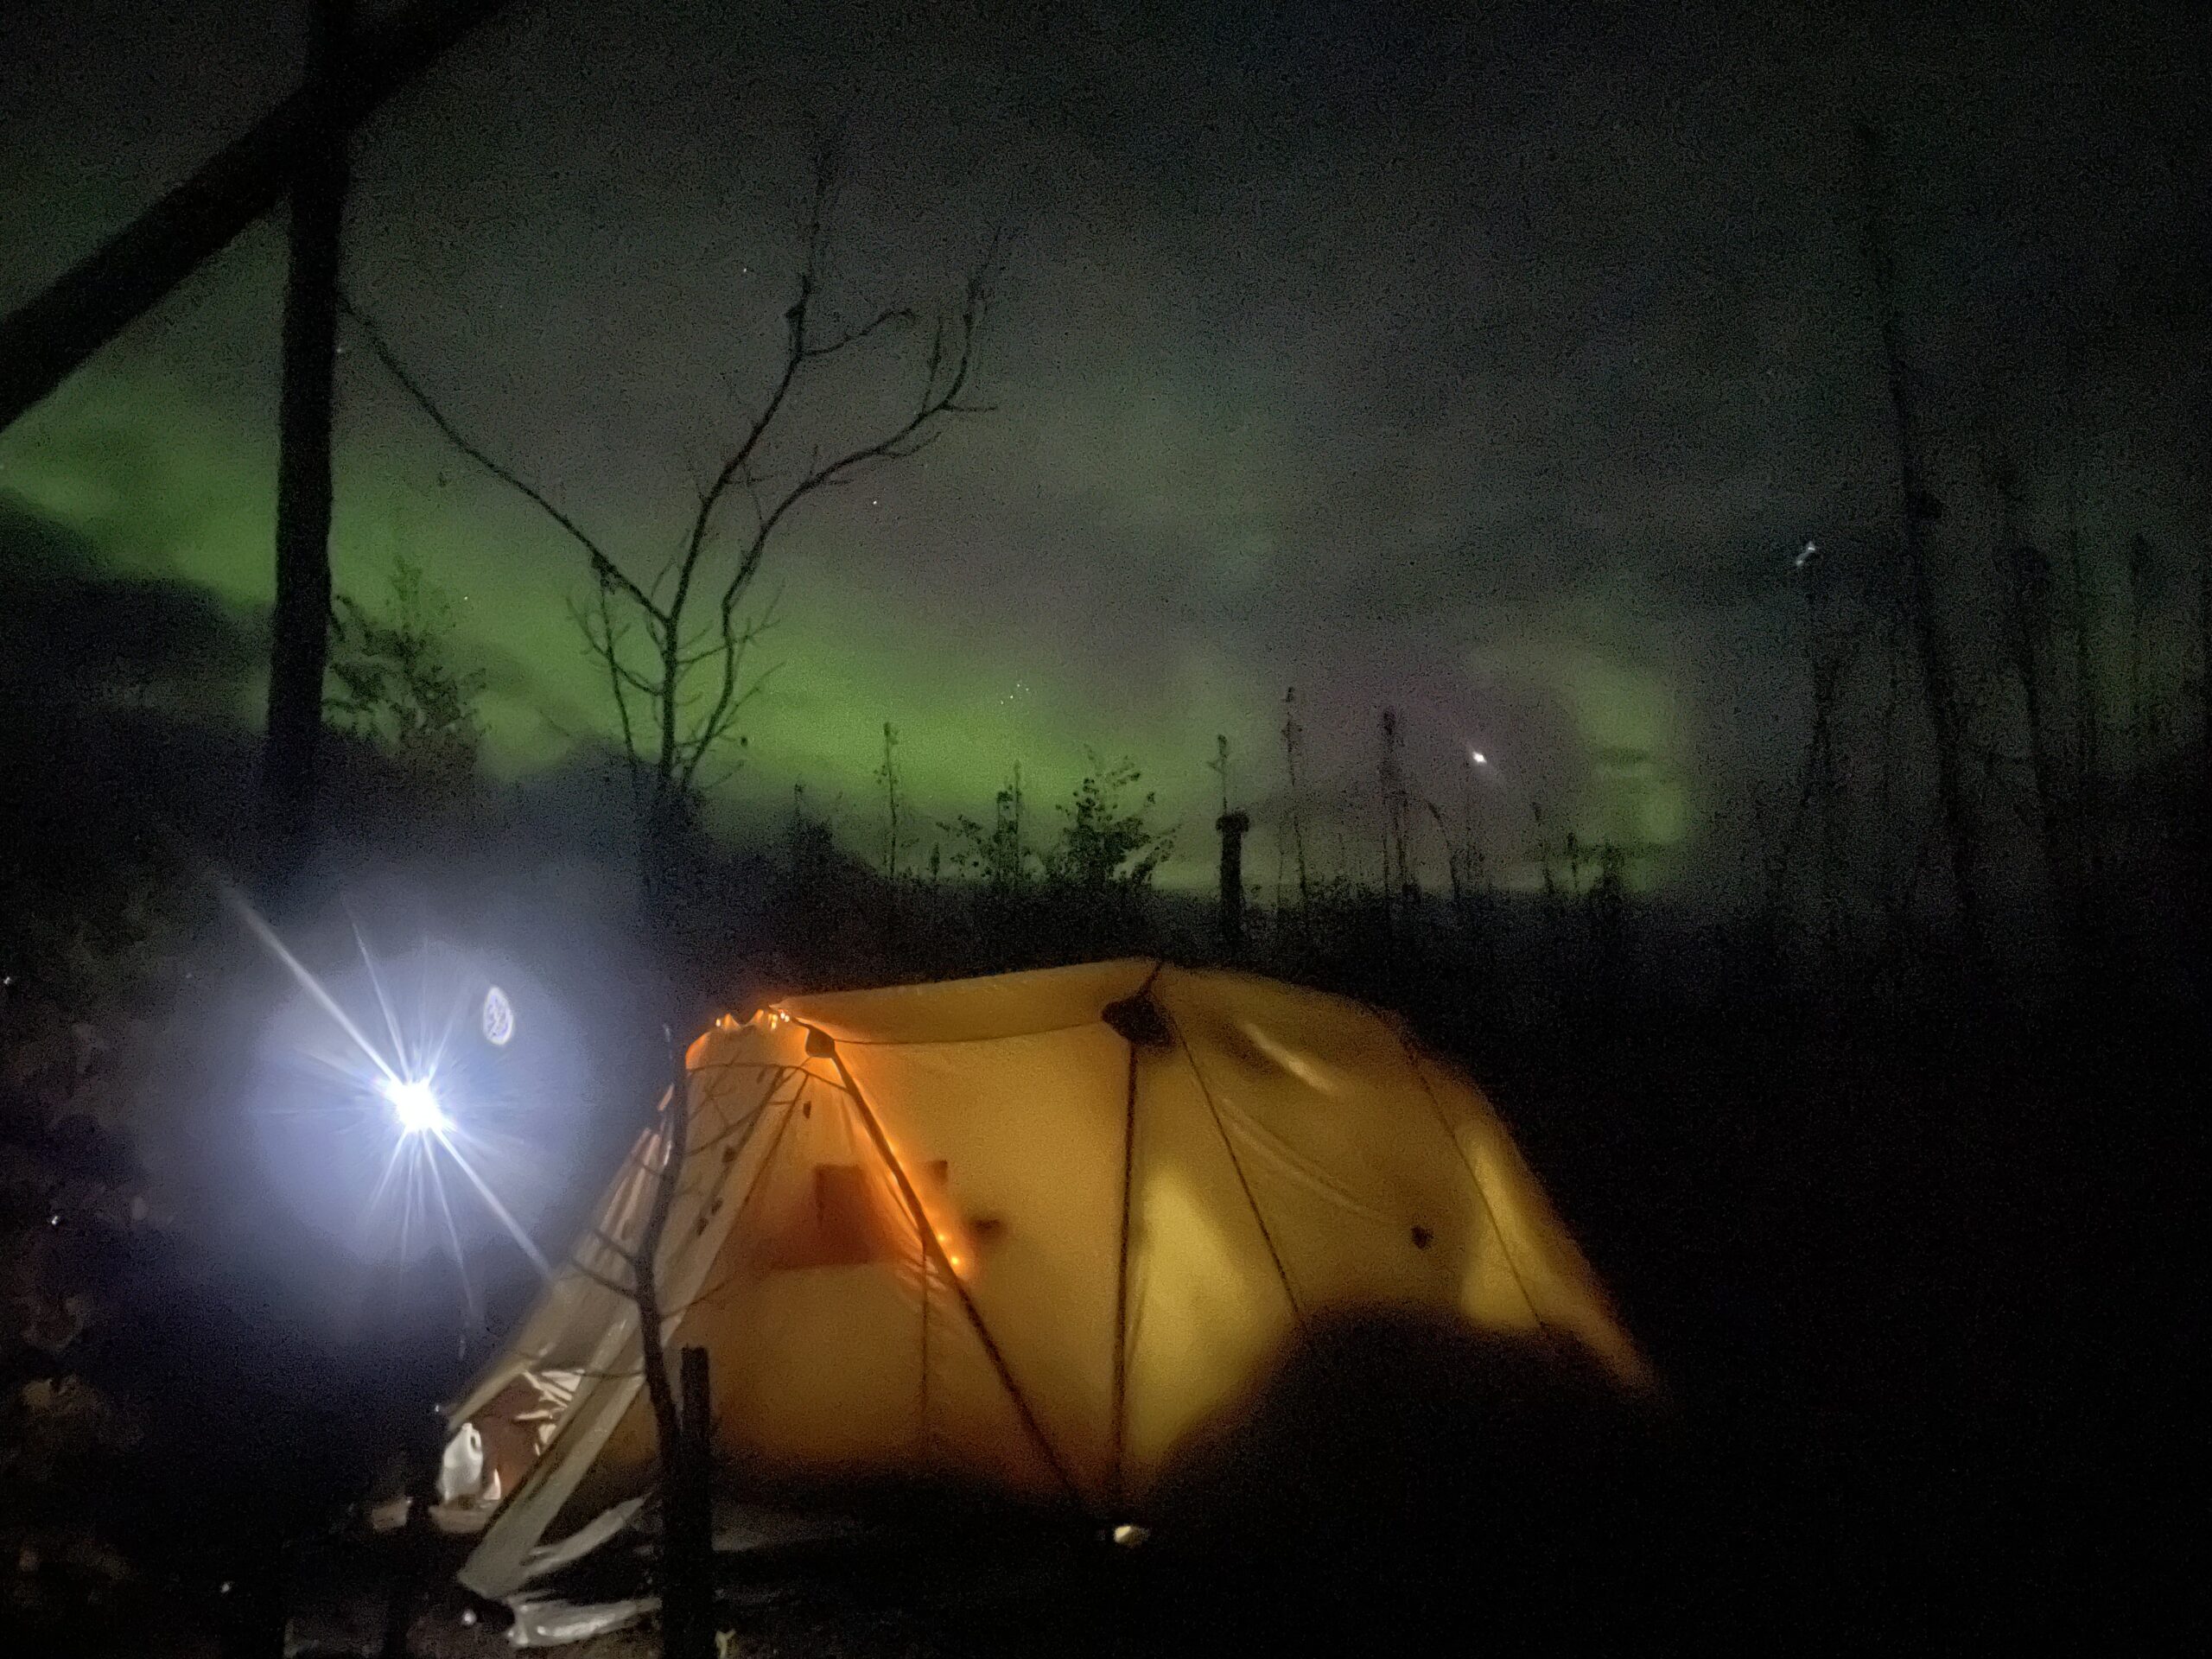 moose camp at night